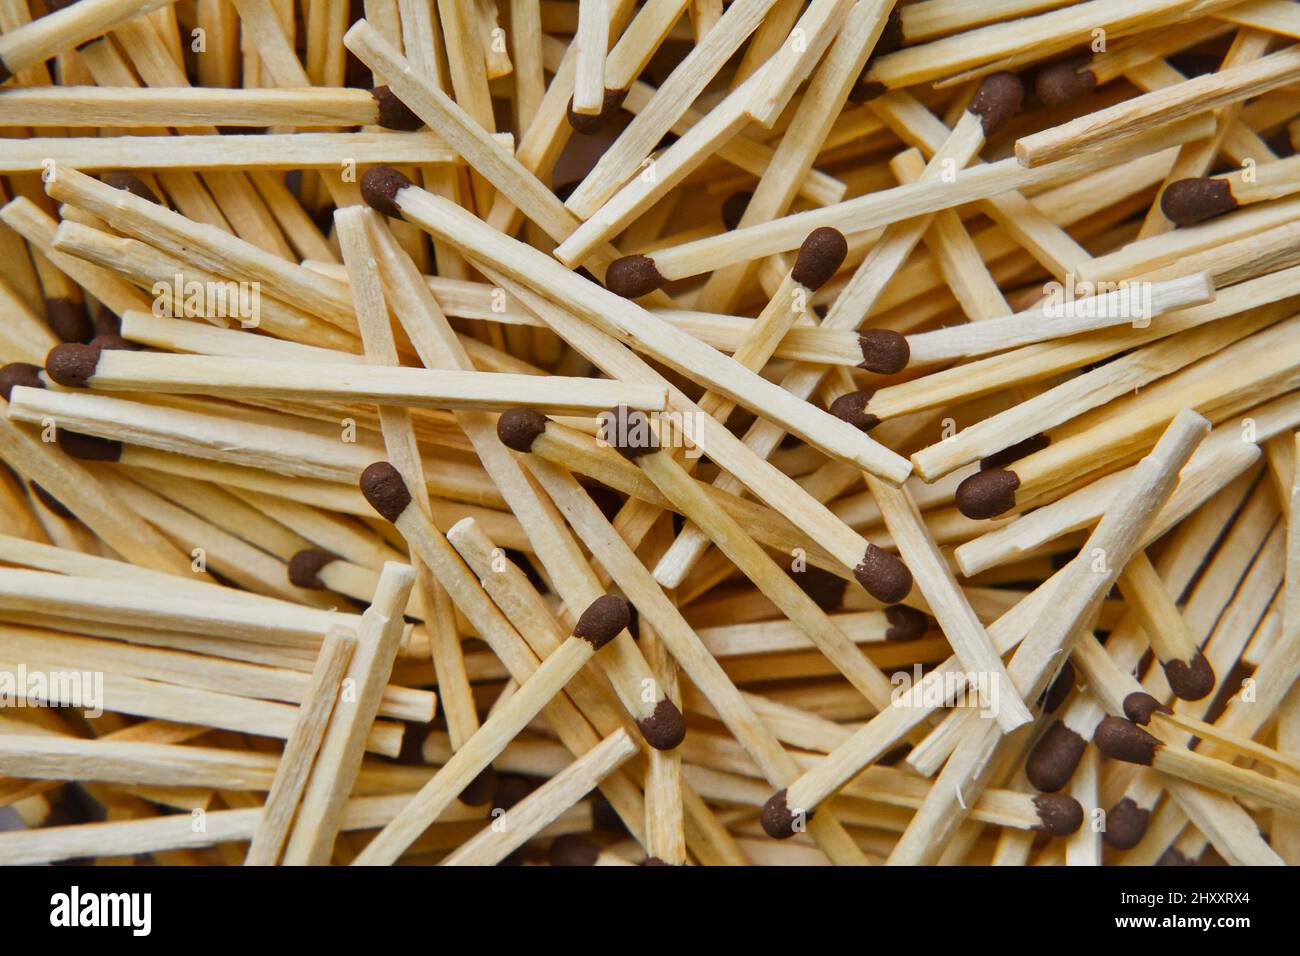 wood matches